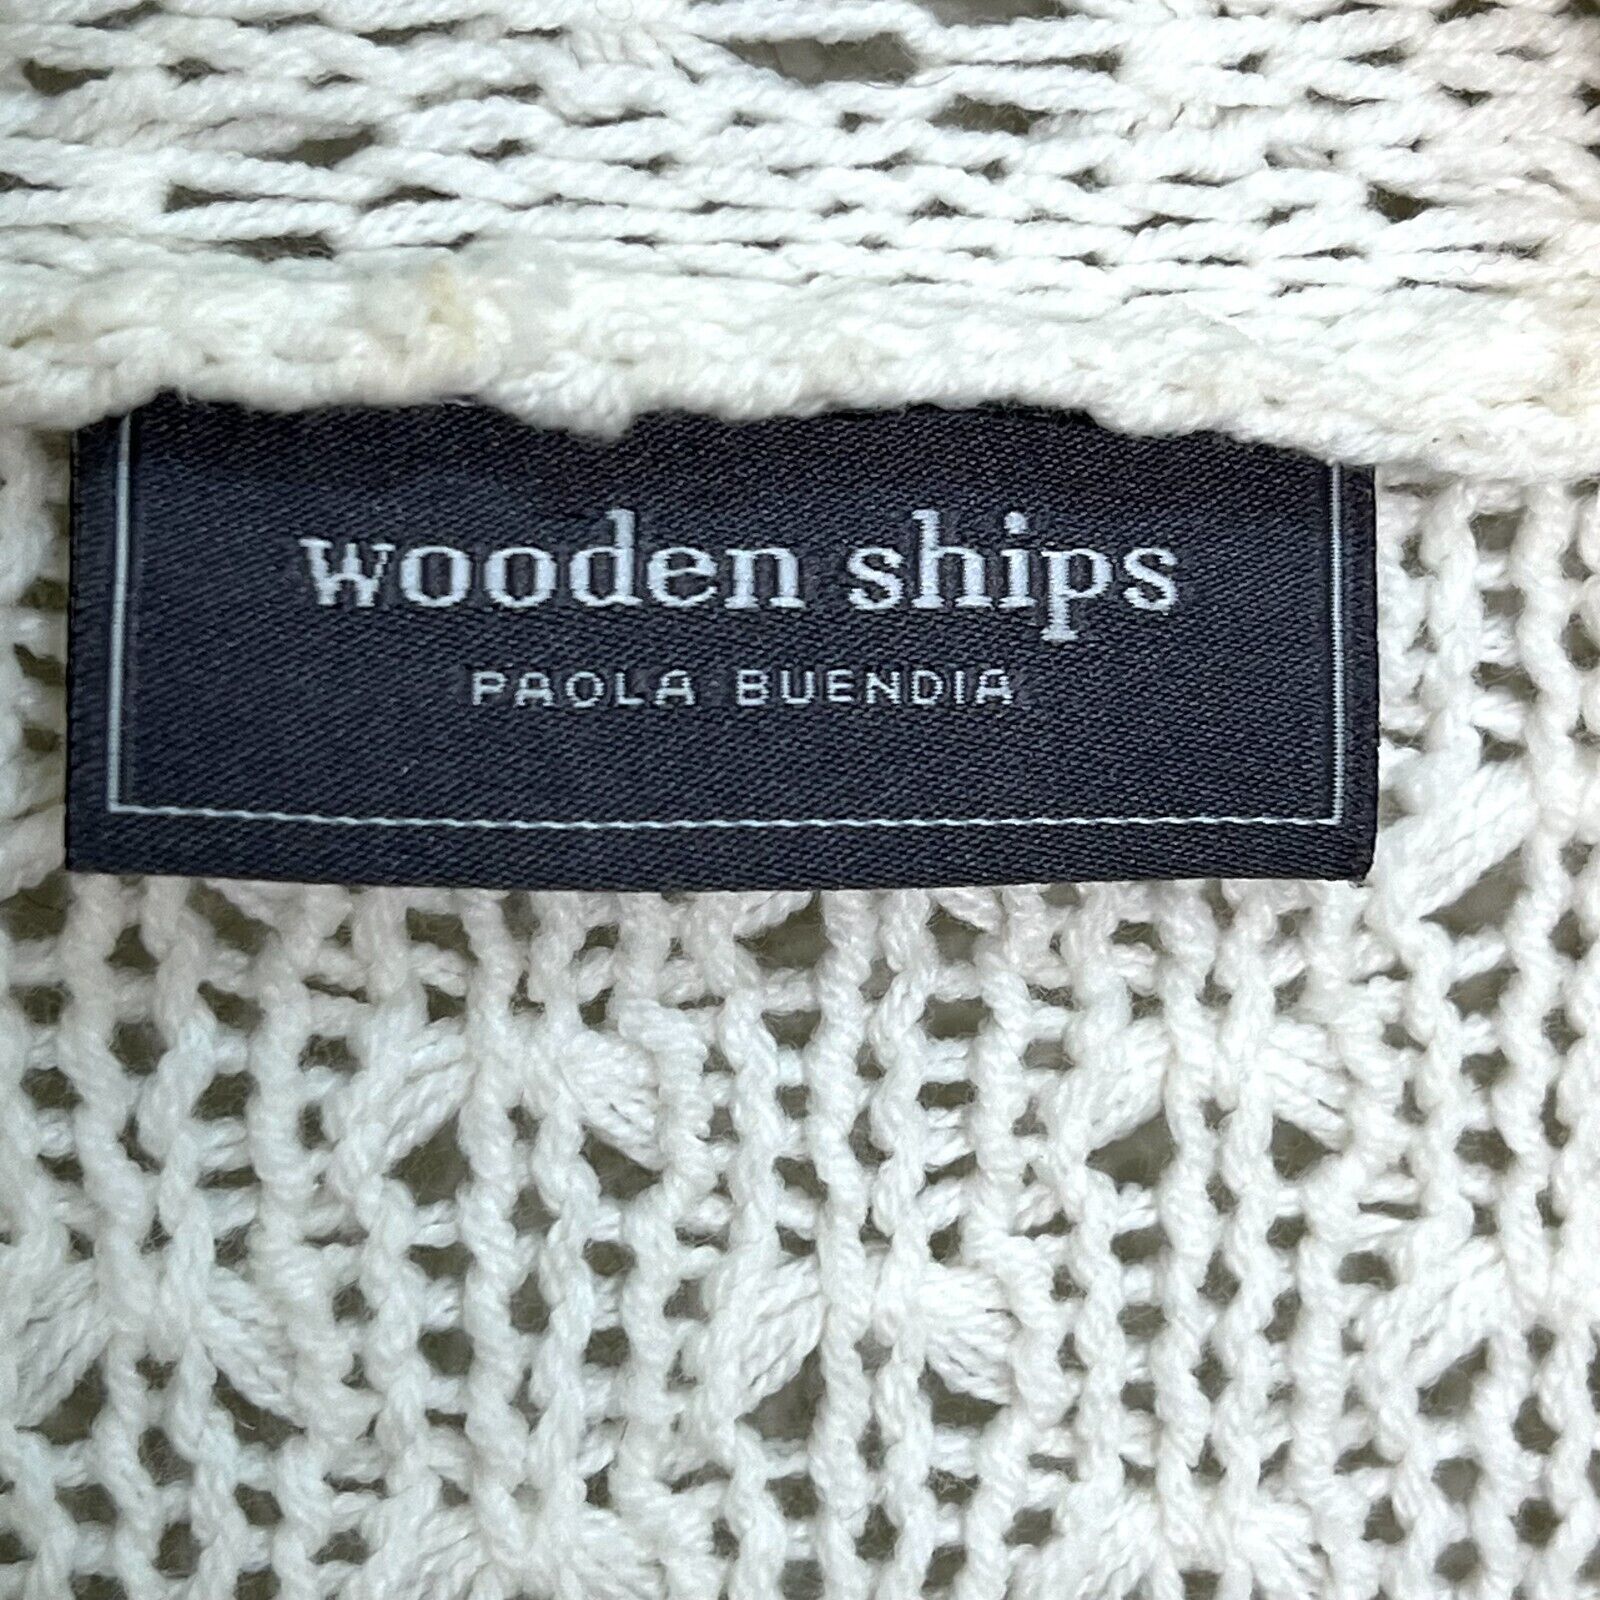 Wooden Ships Ivory Cream Open Knit Cardigan Size Small - Medium